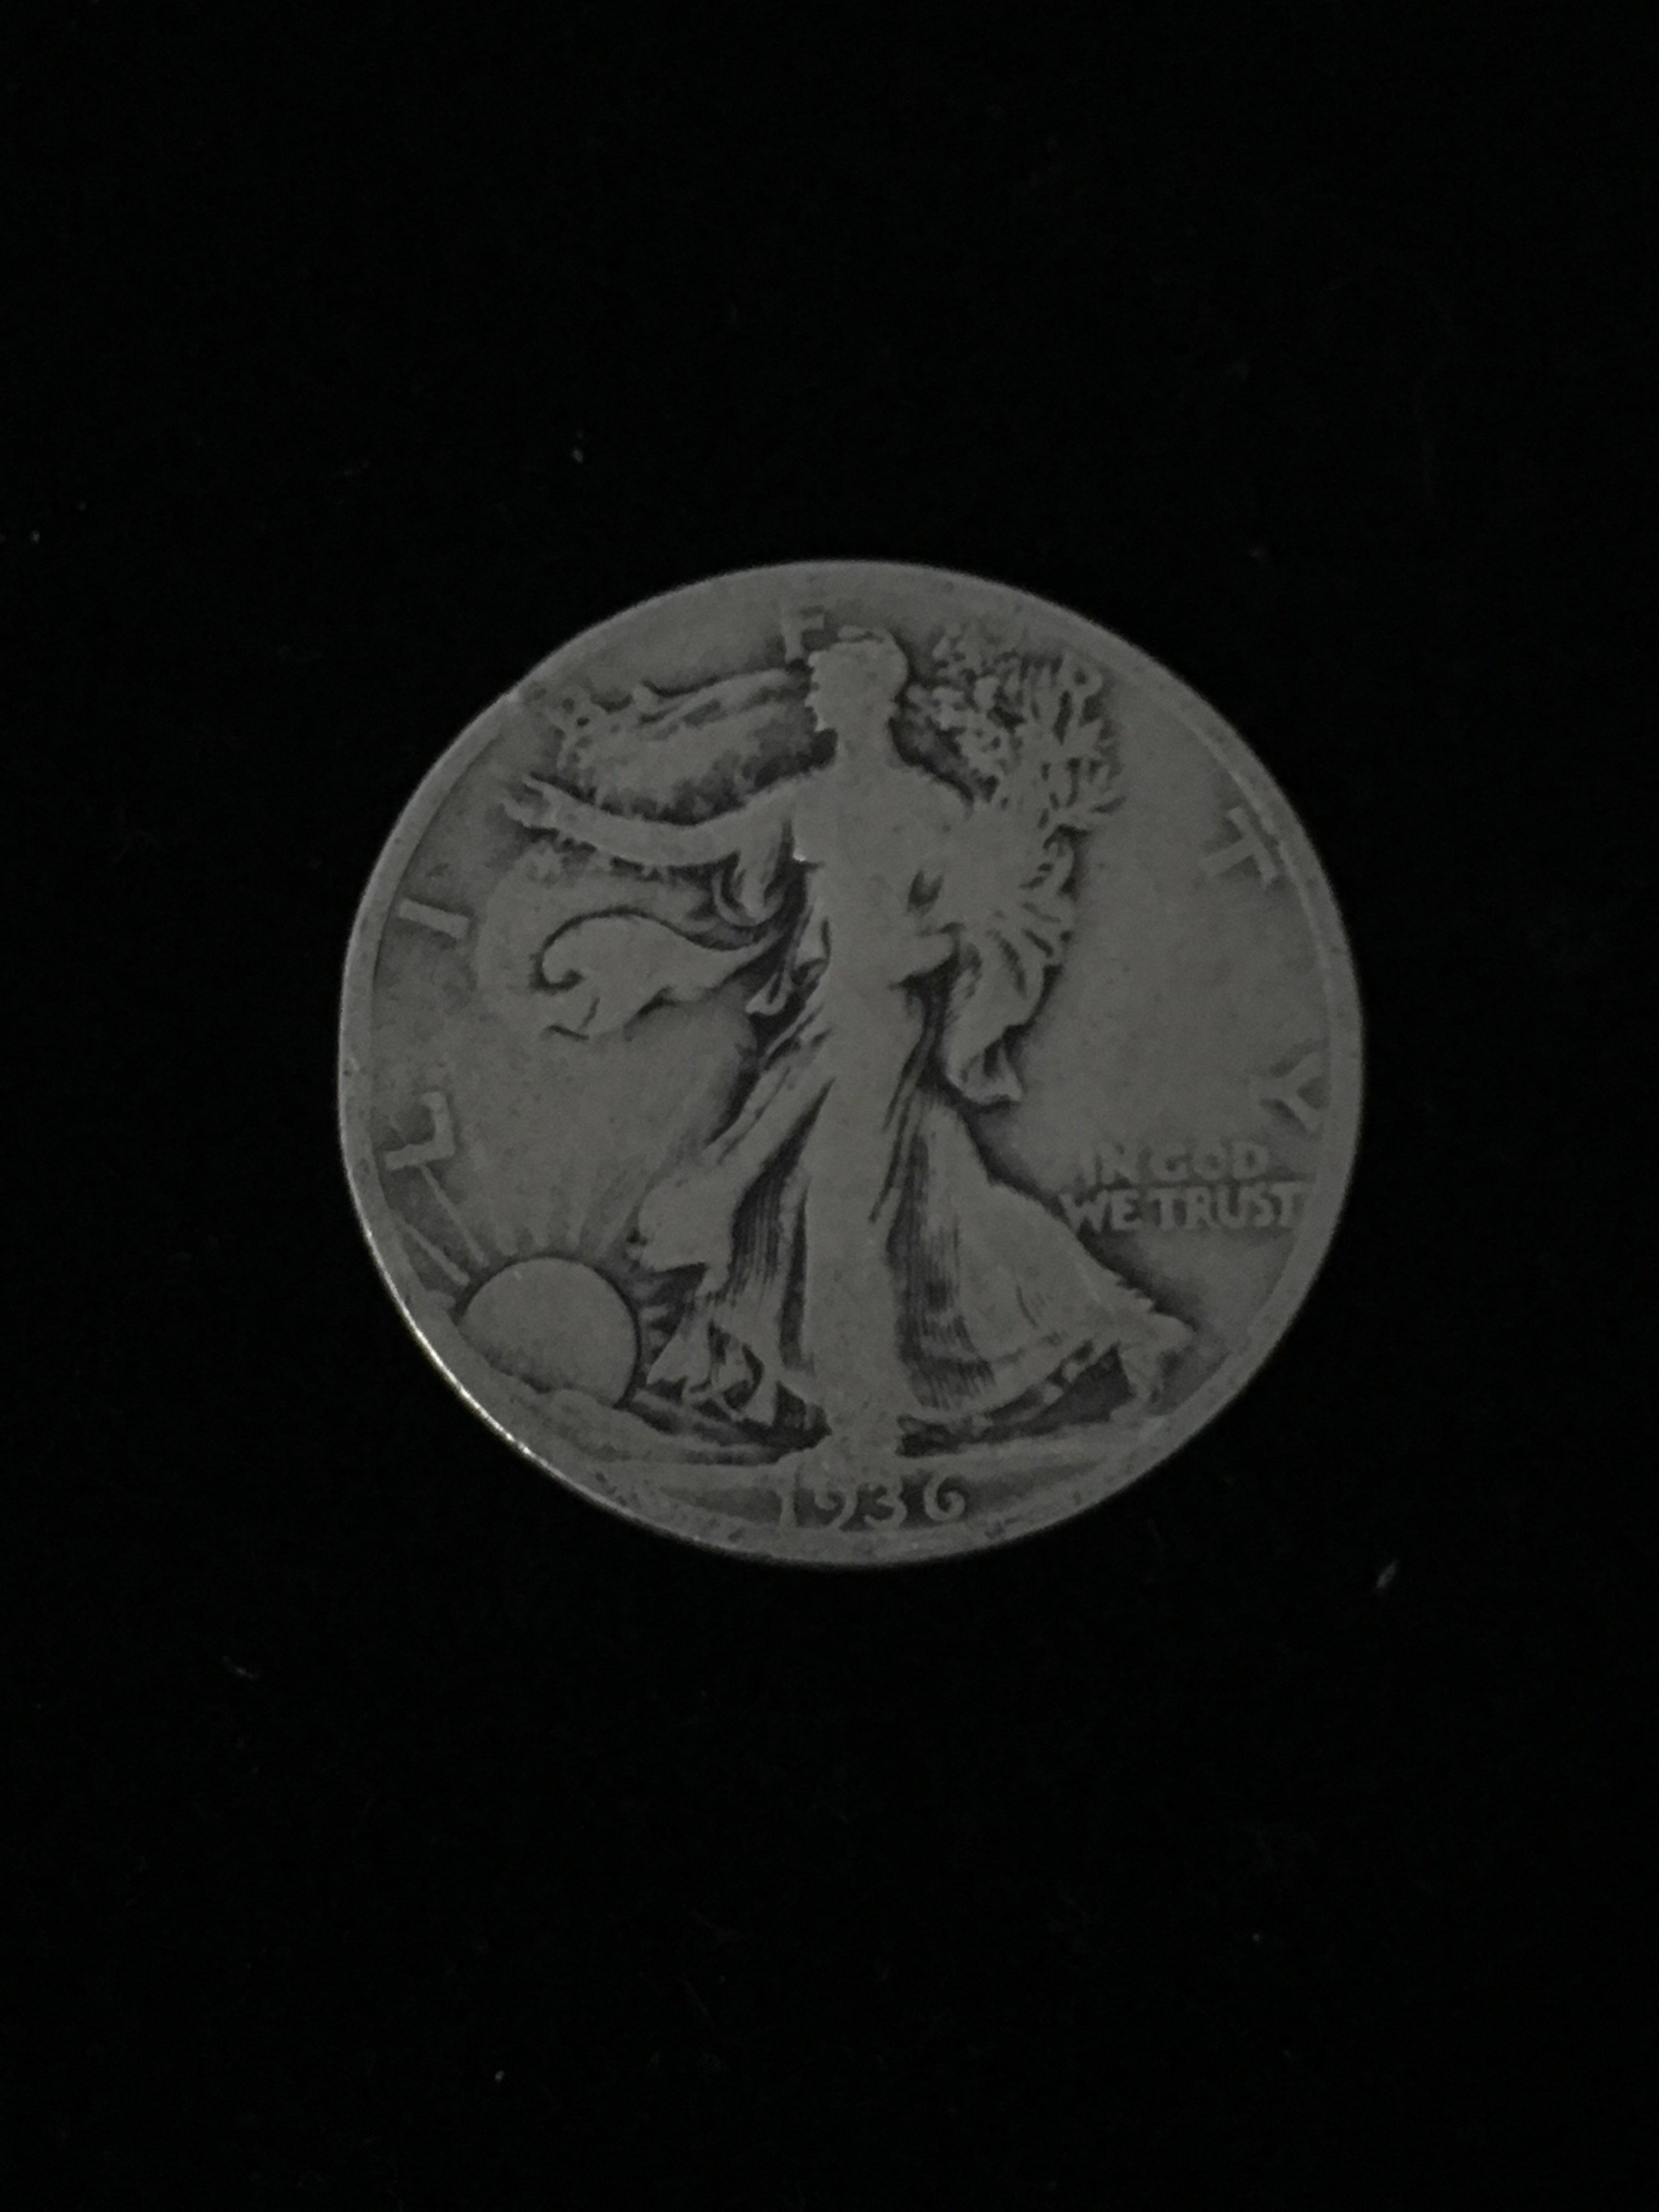 1936 United States Walking Liberty Half Dollar - 90% Silver Coin